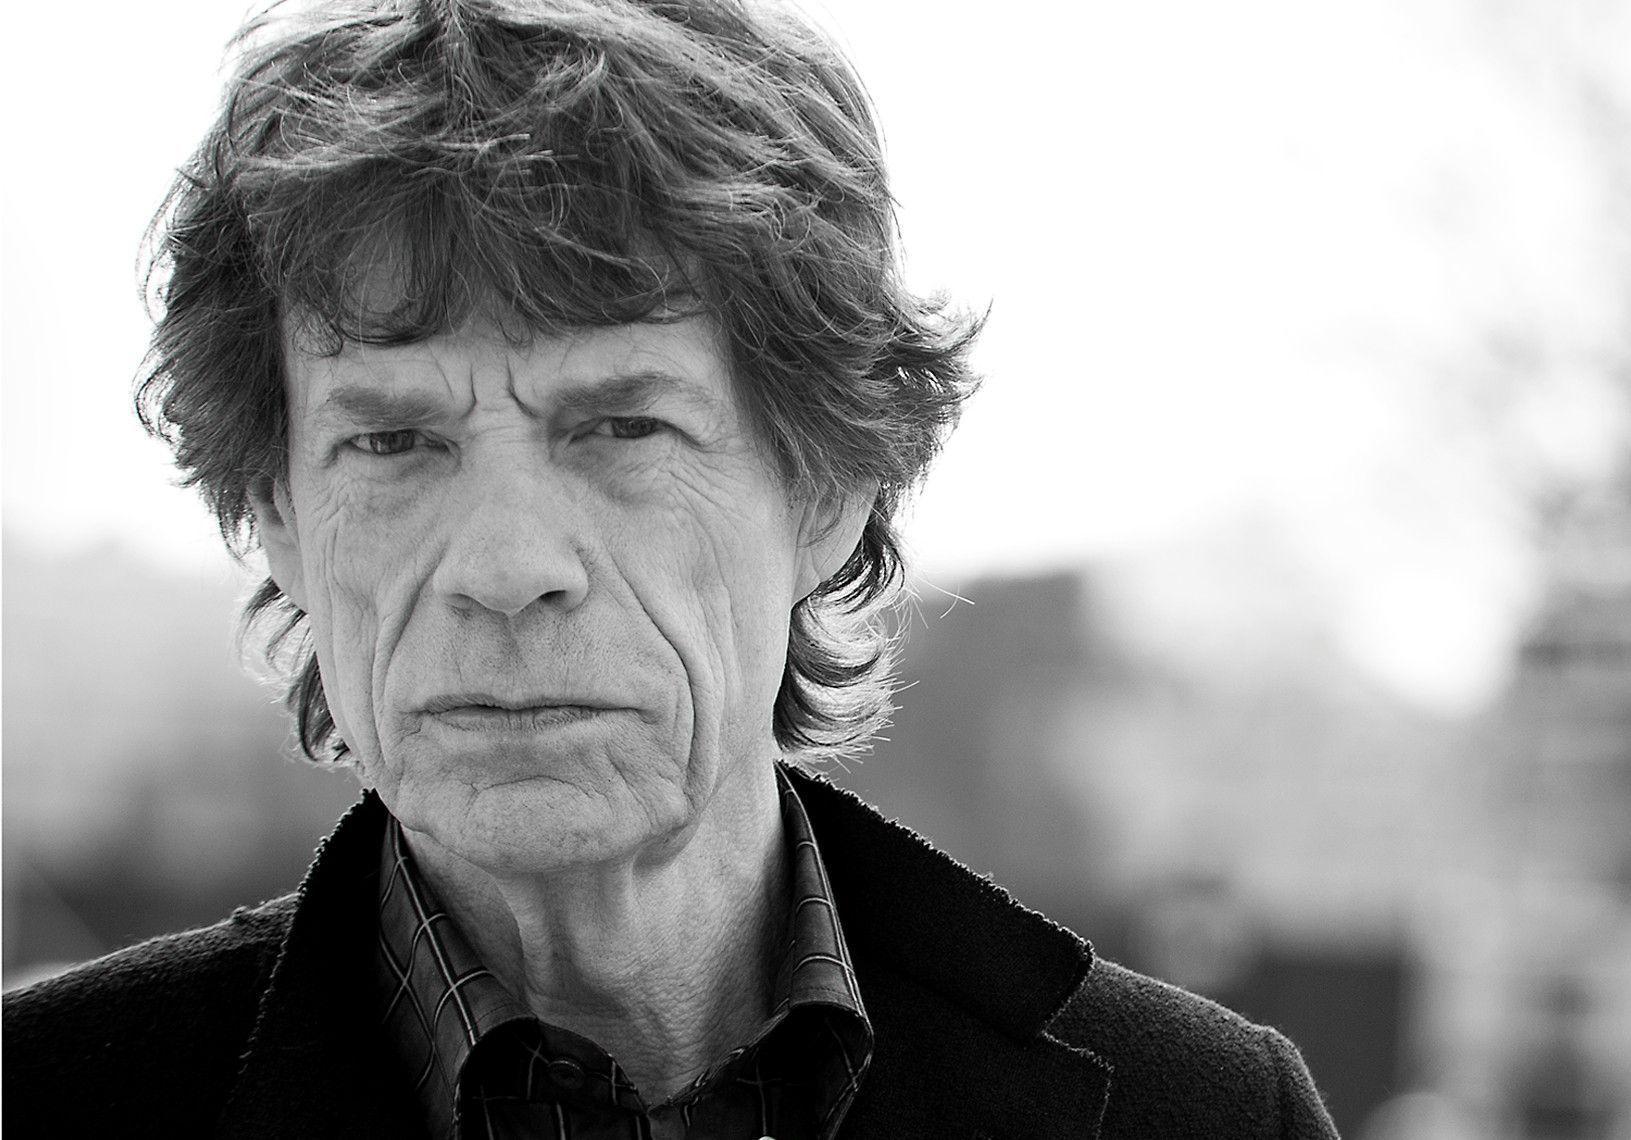 Mick Jagger Old Wallpaper. Free Download Wallpaper from wallpaperank